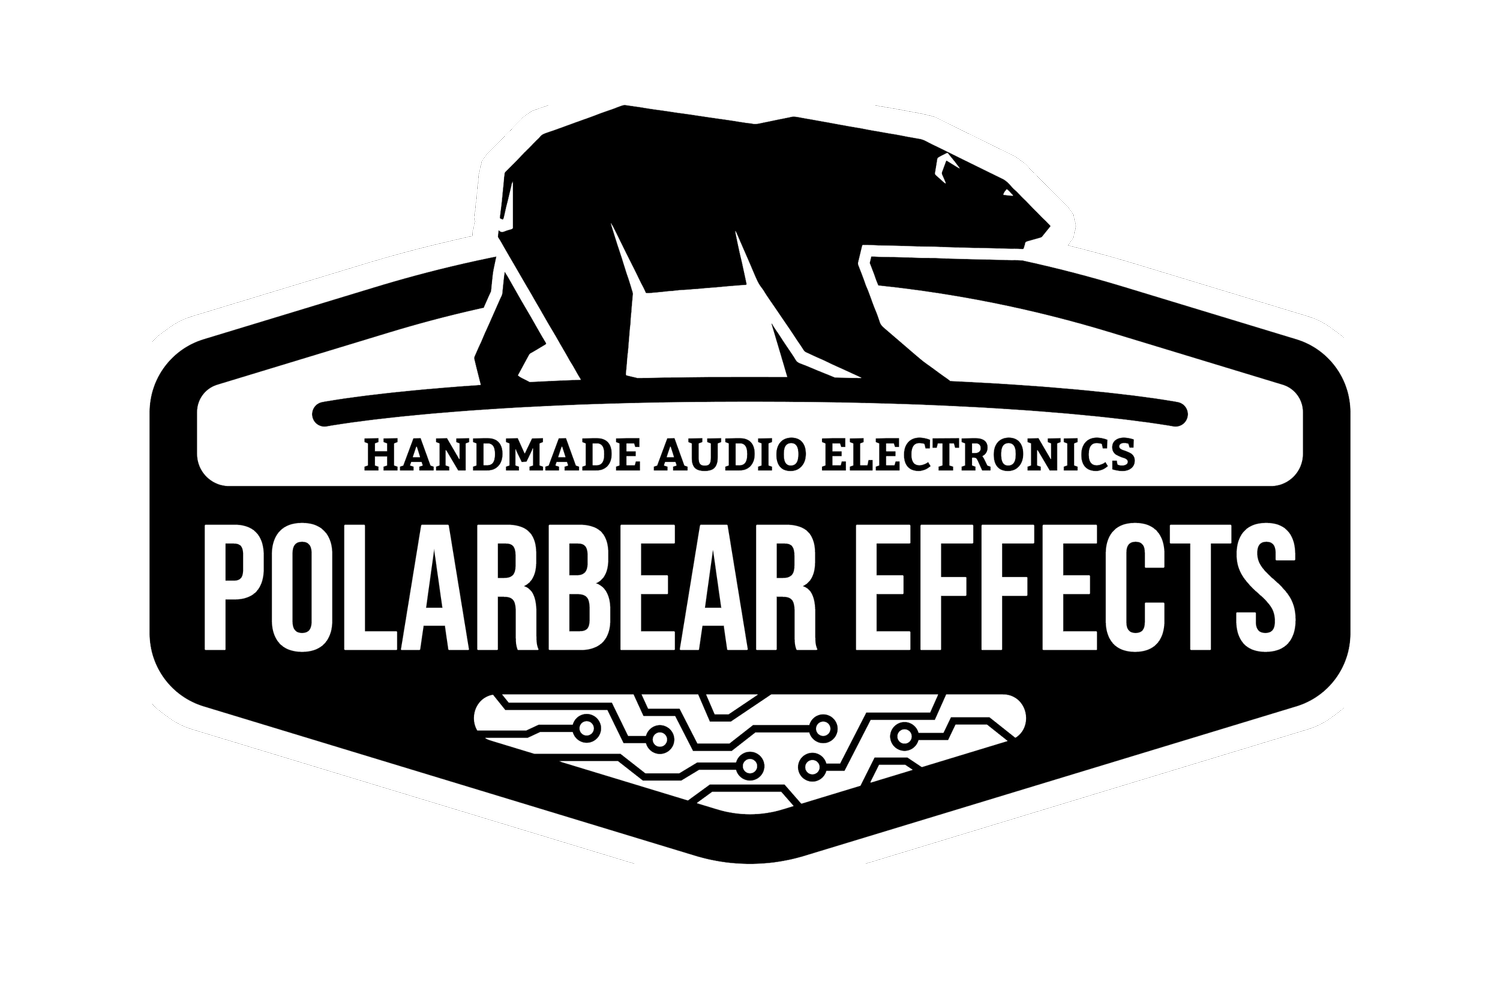 www.polarbeareffects.com